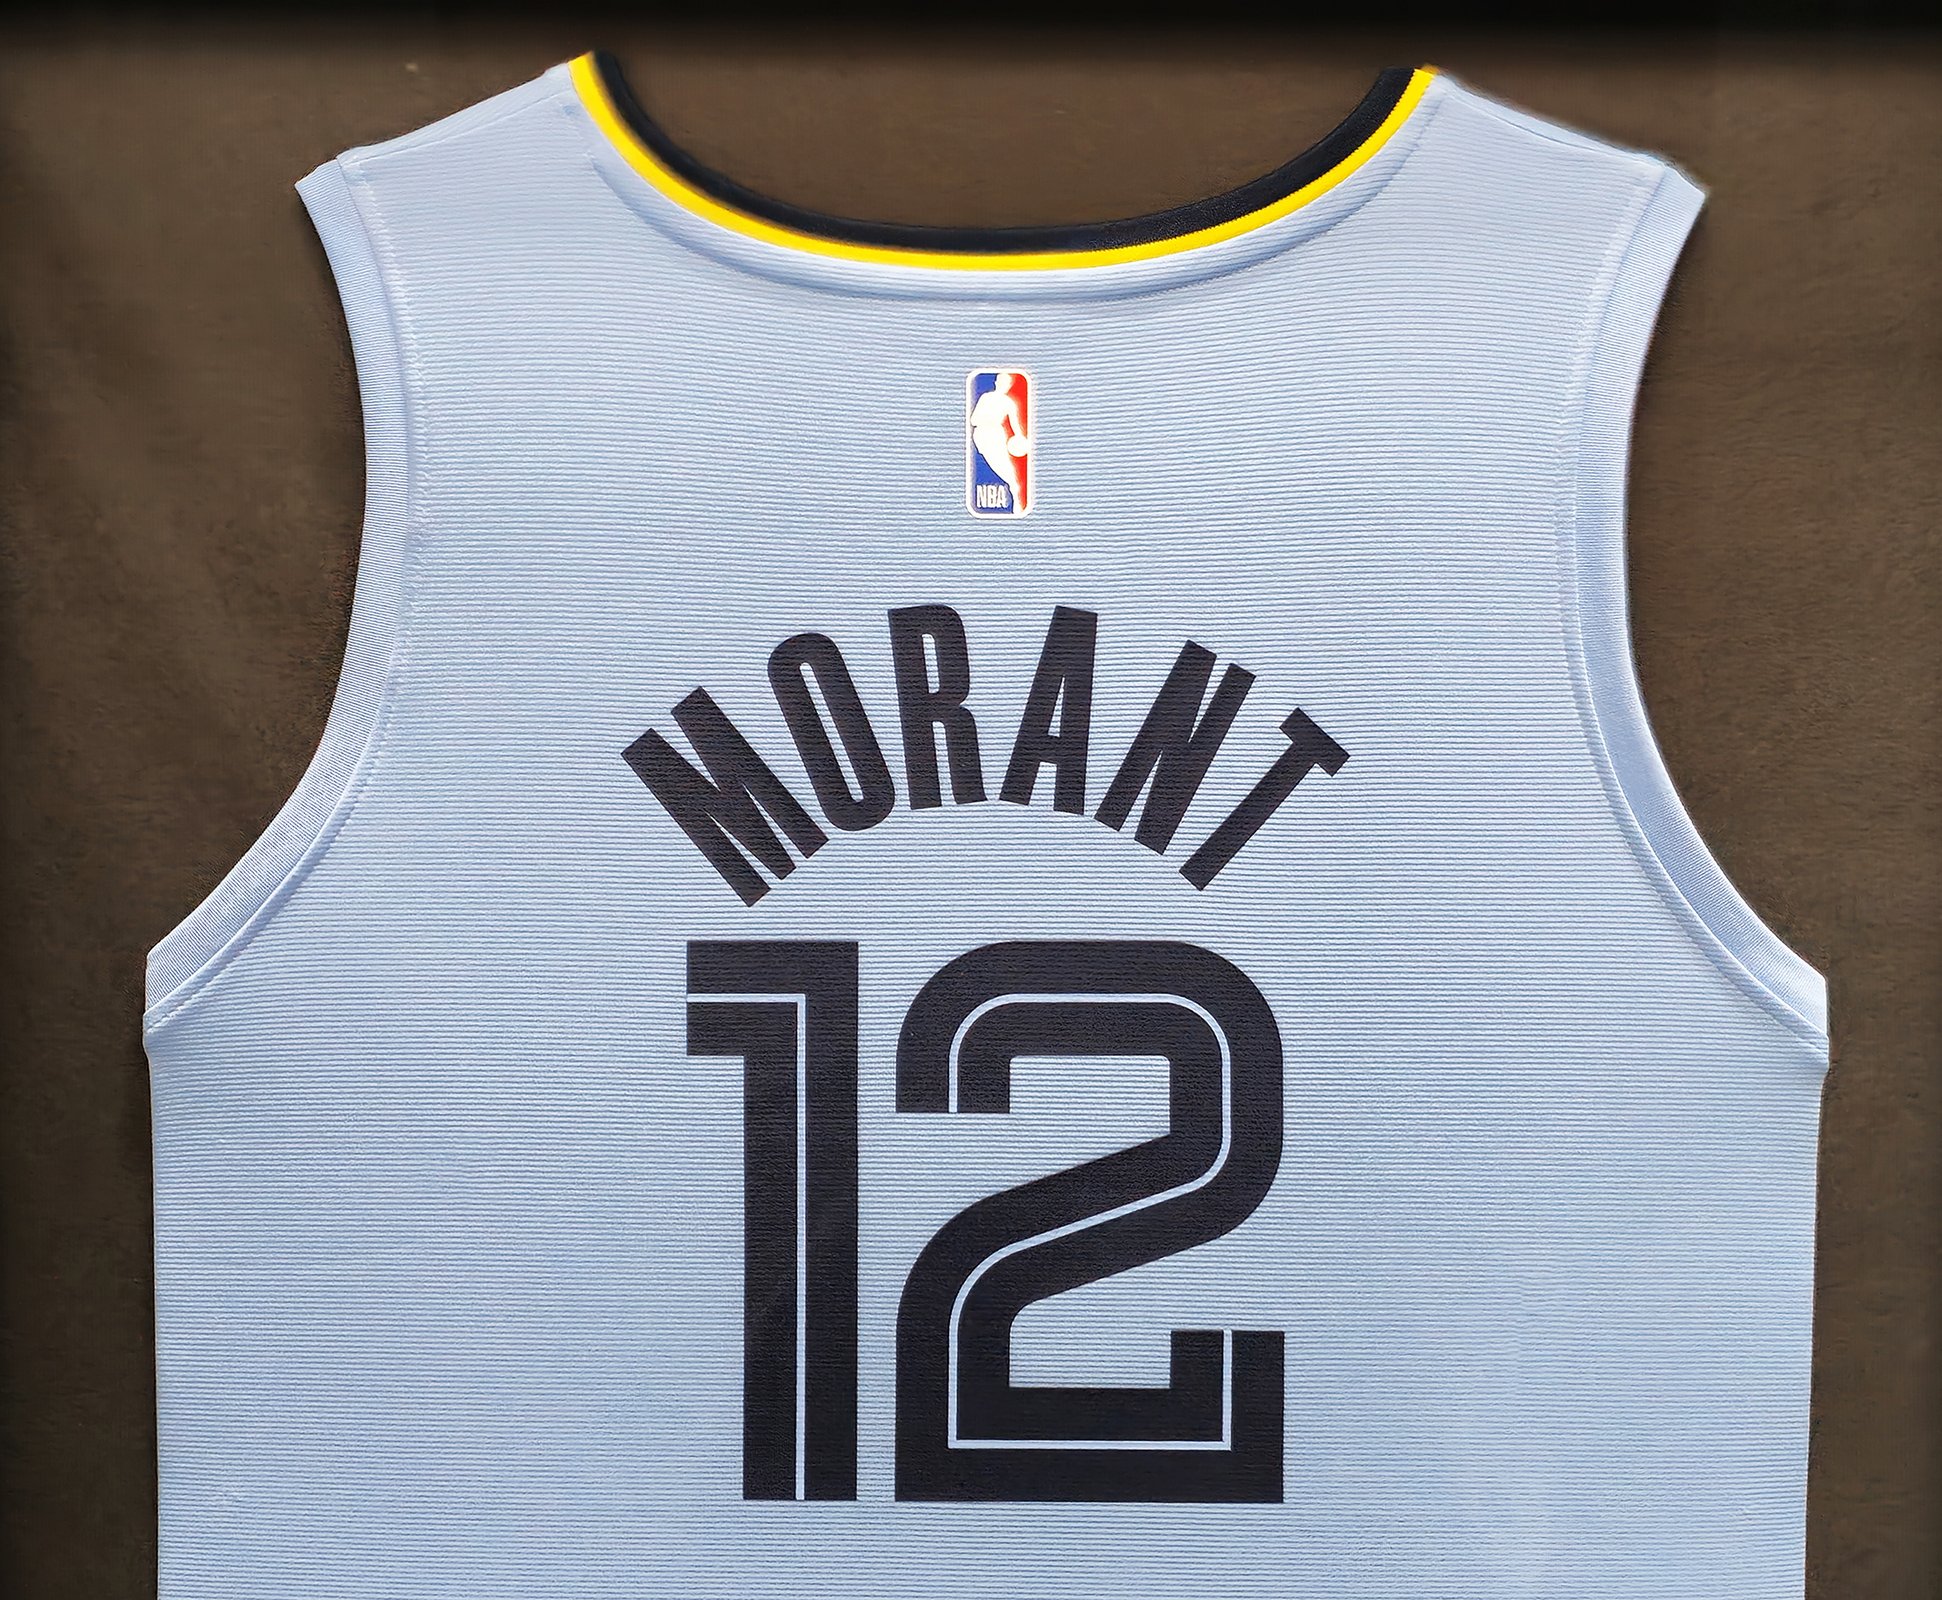 Ja Morant Autographed Memphis Grizzlies Nike Swingman Jersey